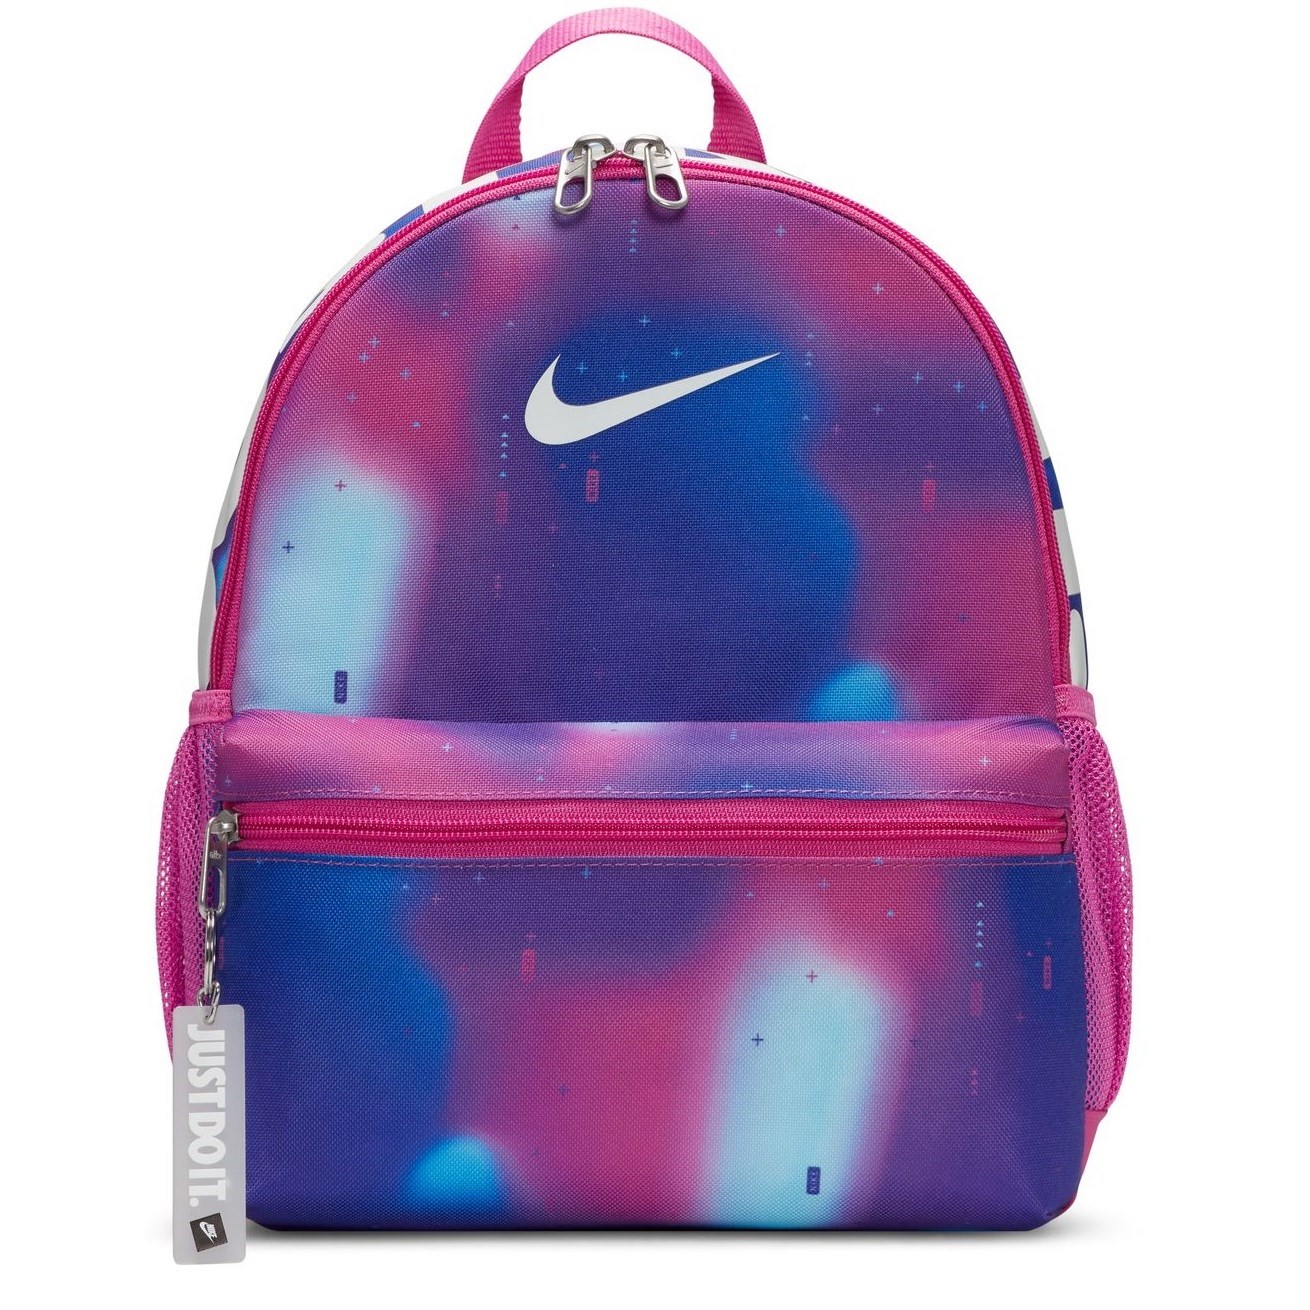 Nike Brasilia JDI Mini Kids Backpack Bag - Active Fuchsia/Black/White